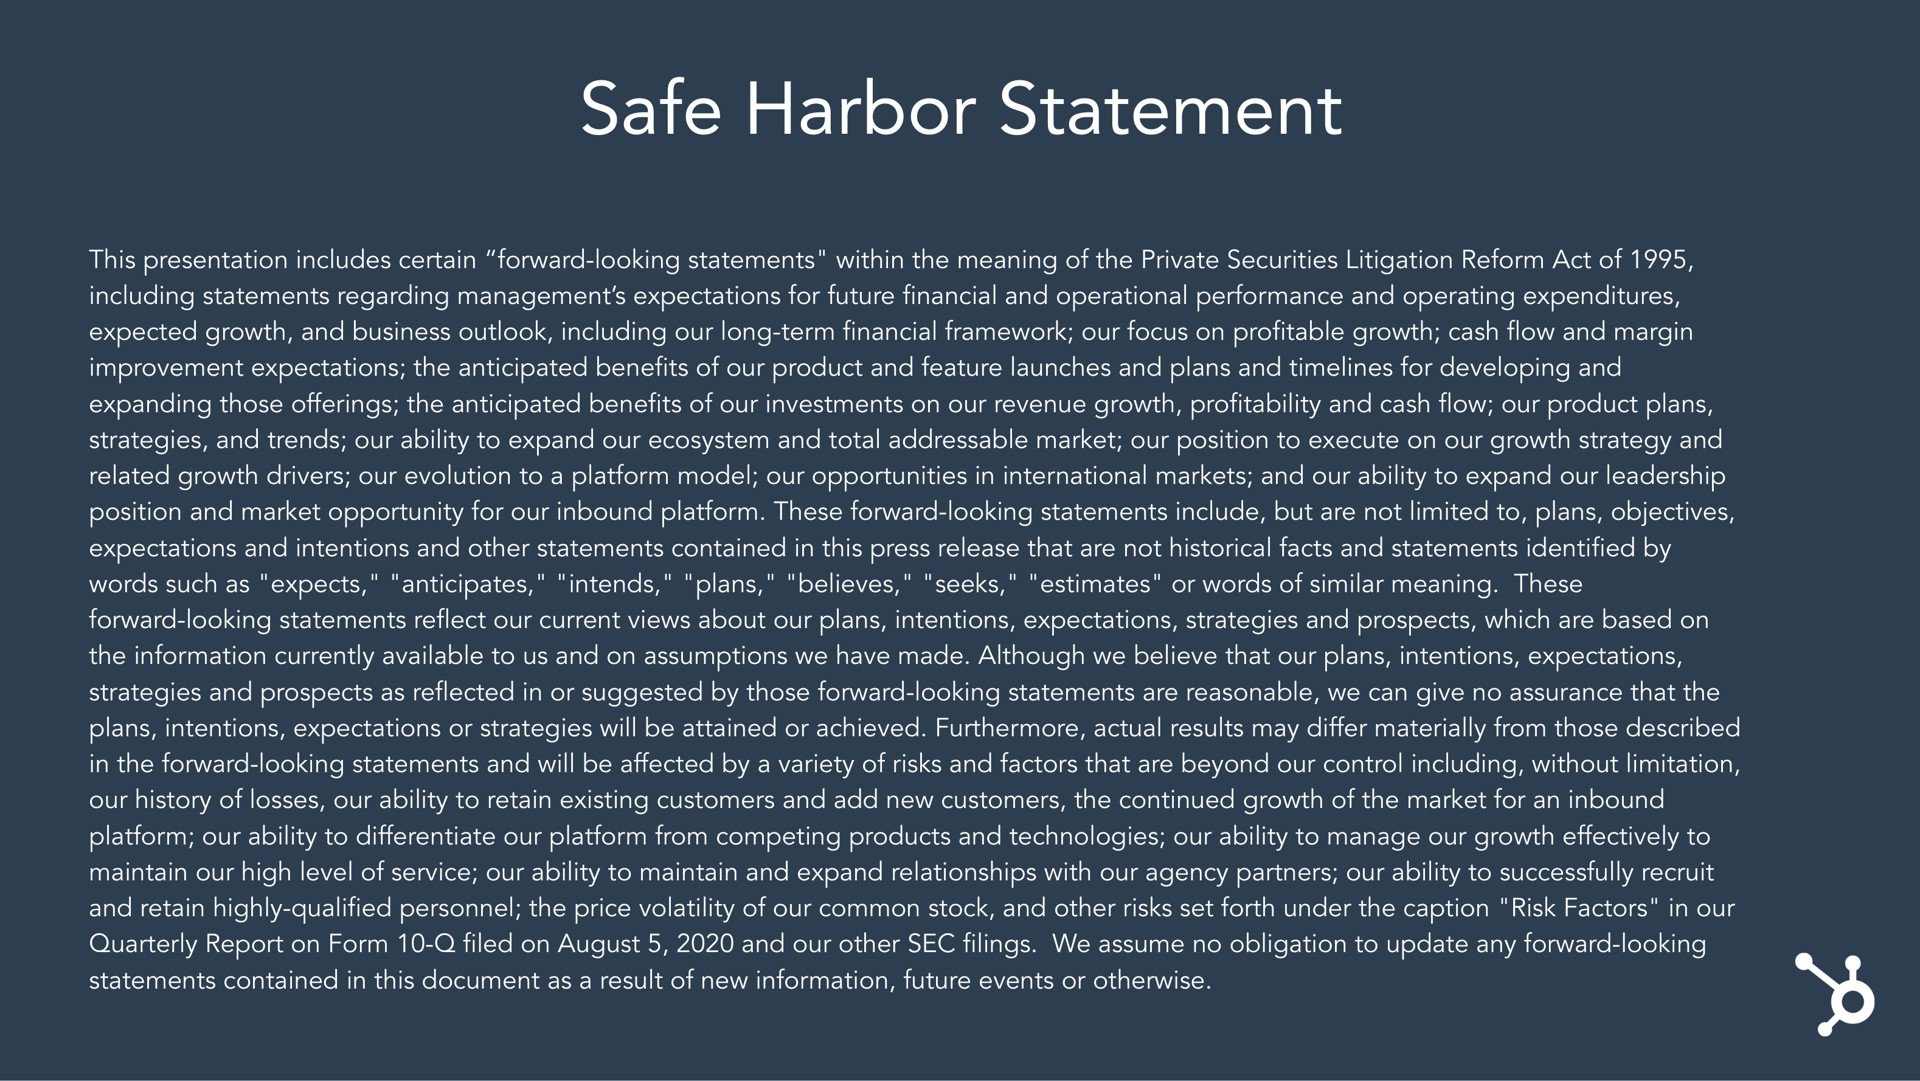 safe harbor statement | Hubspot